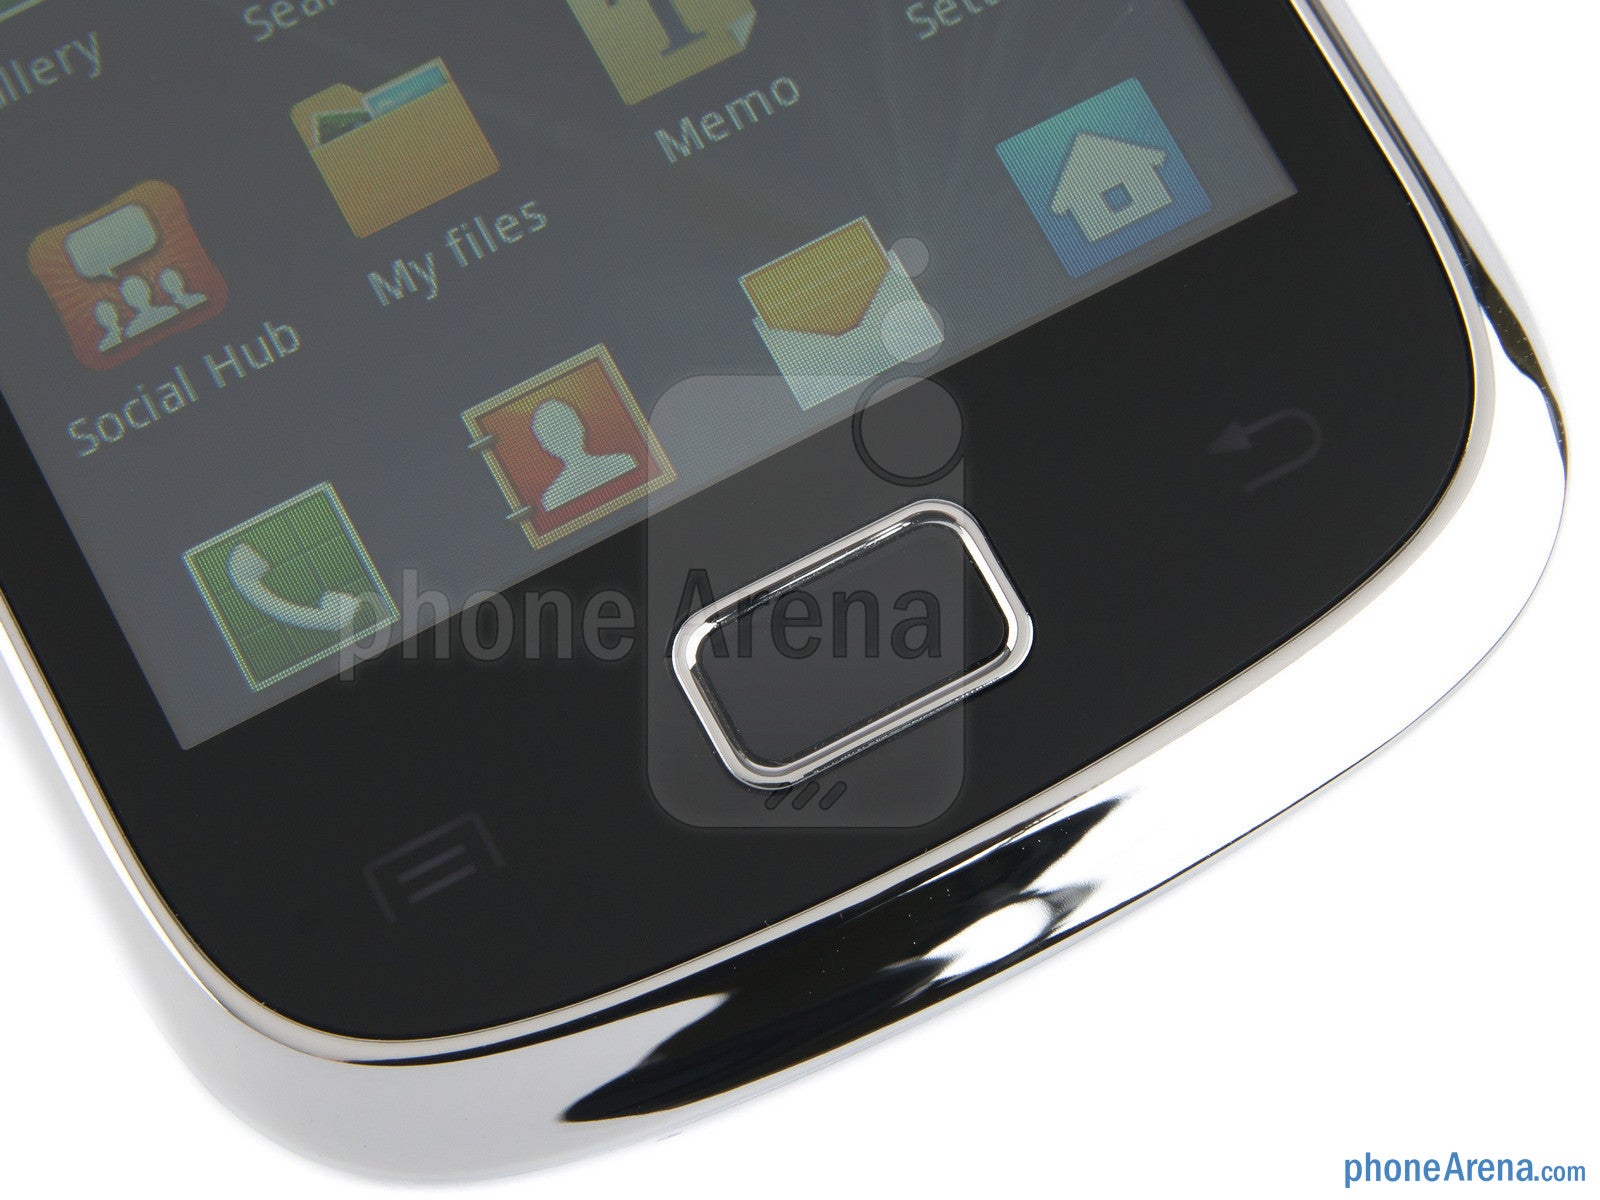 Samsung Galaxy mini 2 Review